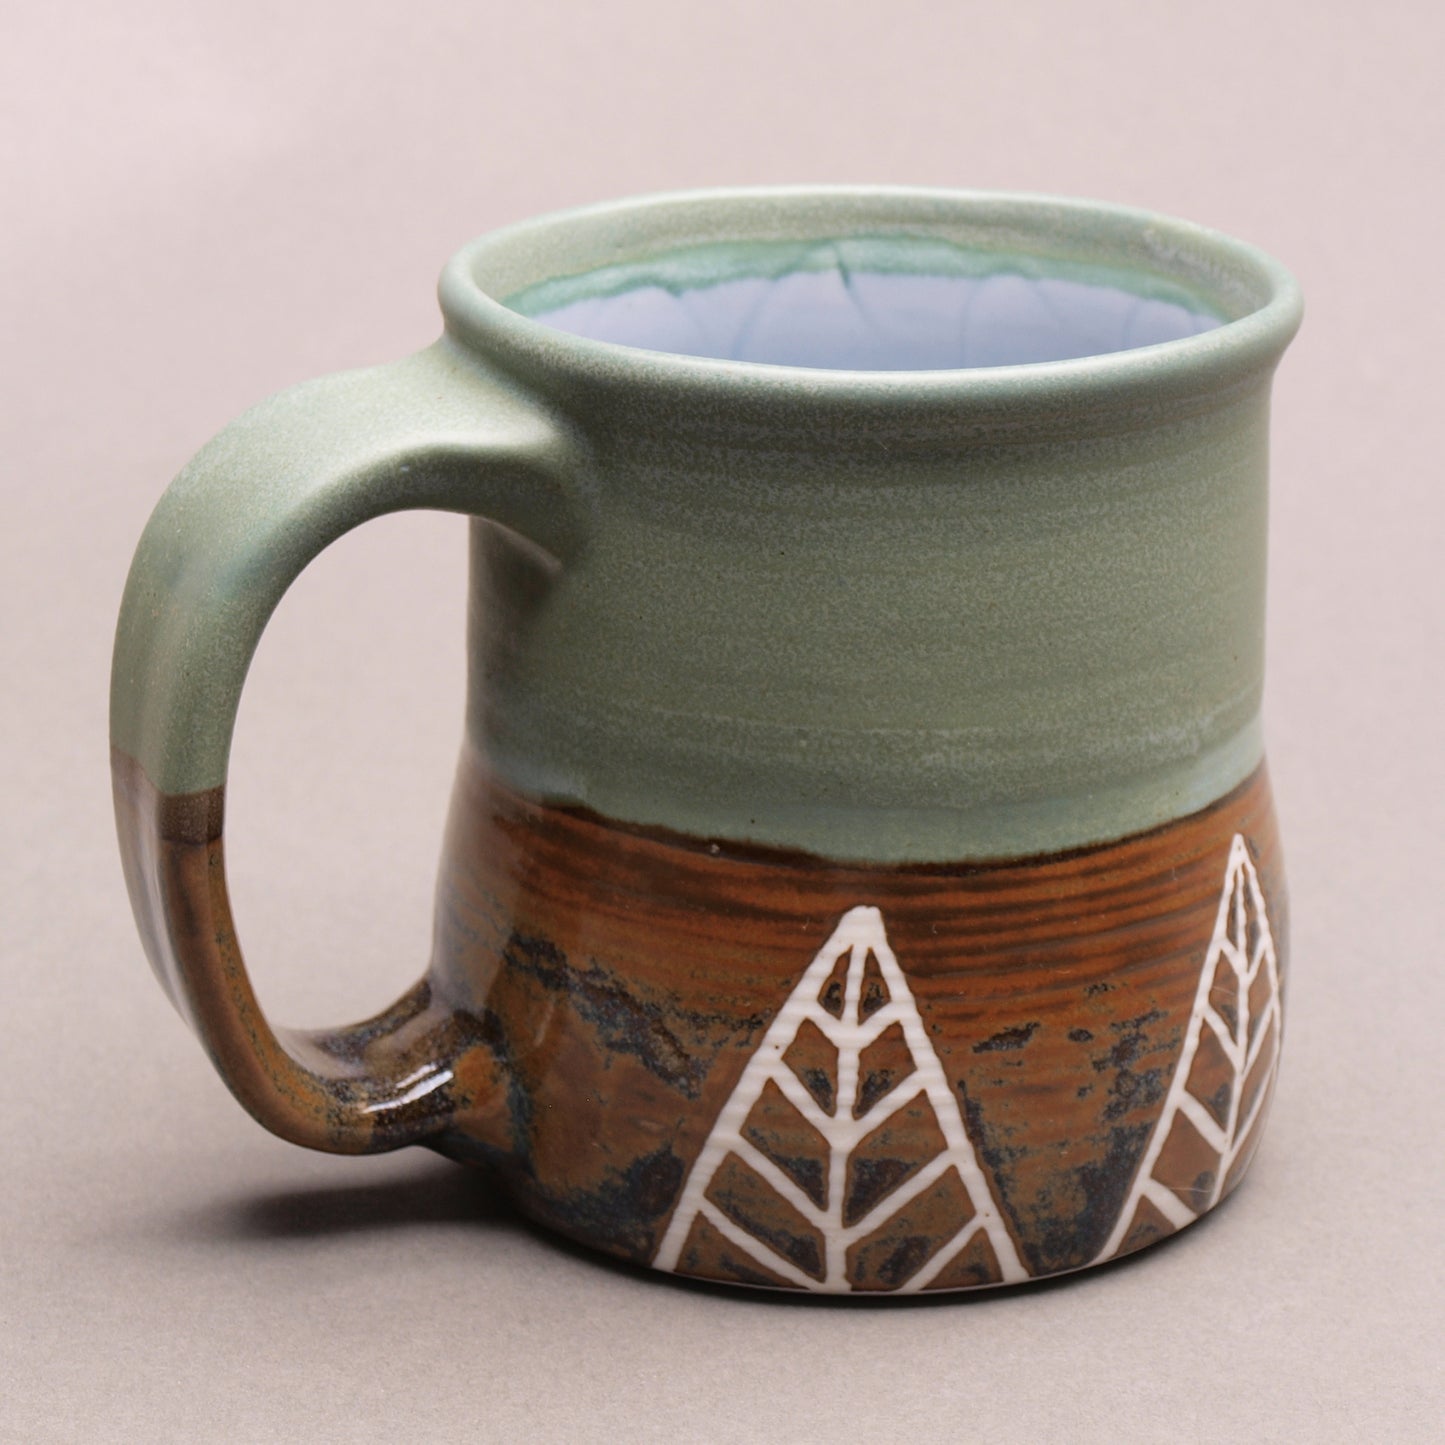 Handcrafted Ceramic Mug by Mike Hays: Artistry, Ergonomics, and Durability MUG #2